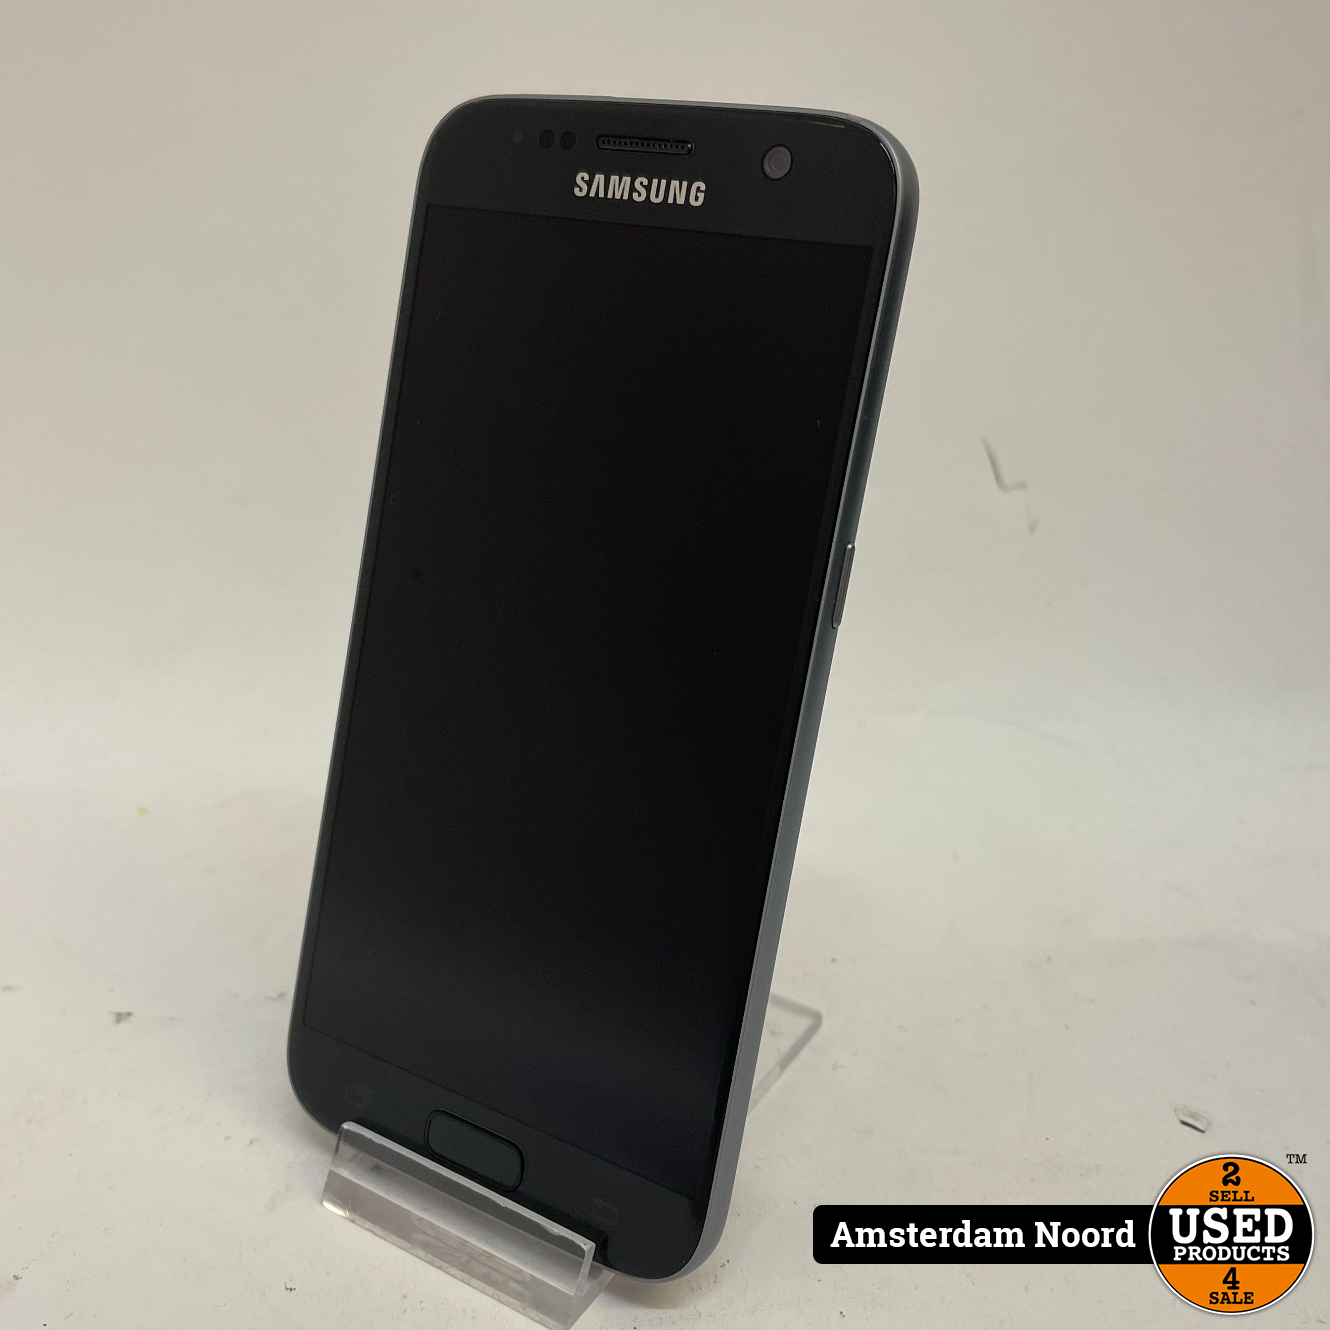 Samsung Galaxy S7 32GB Zwart - Used Amsterdam Noord